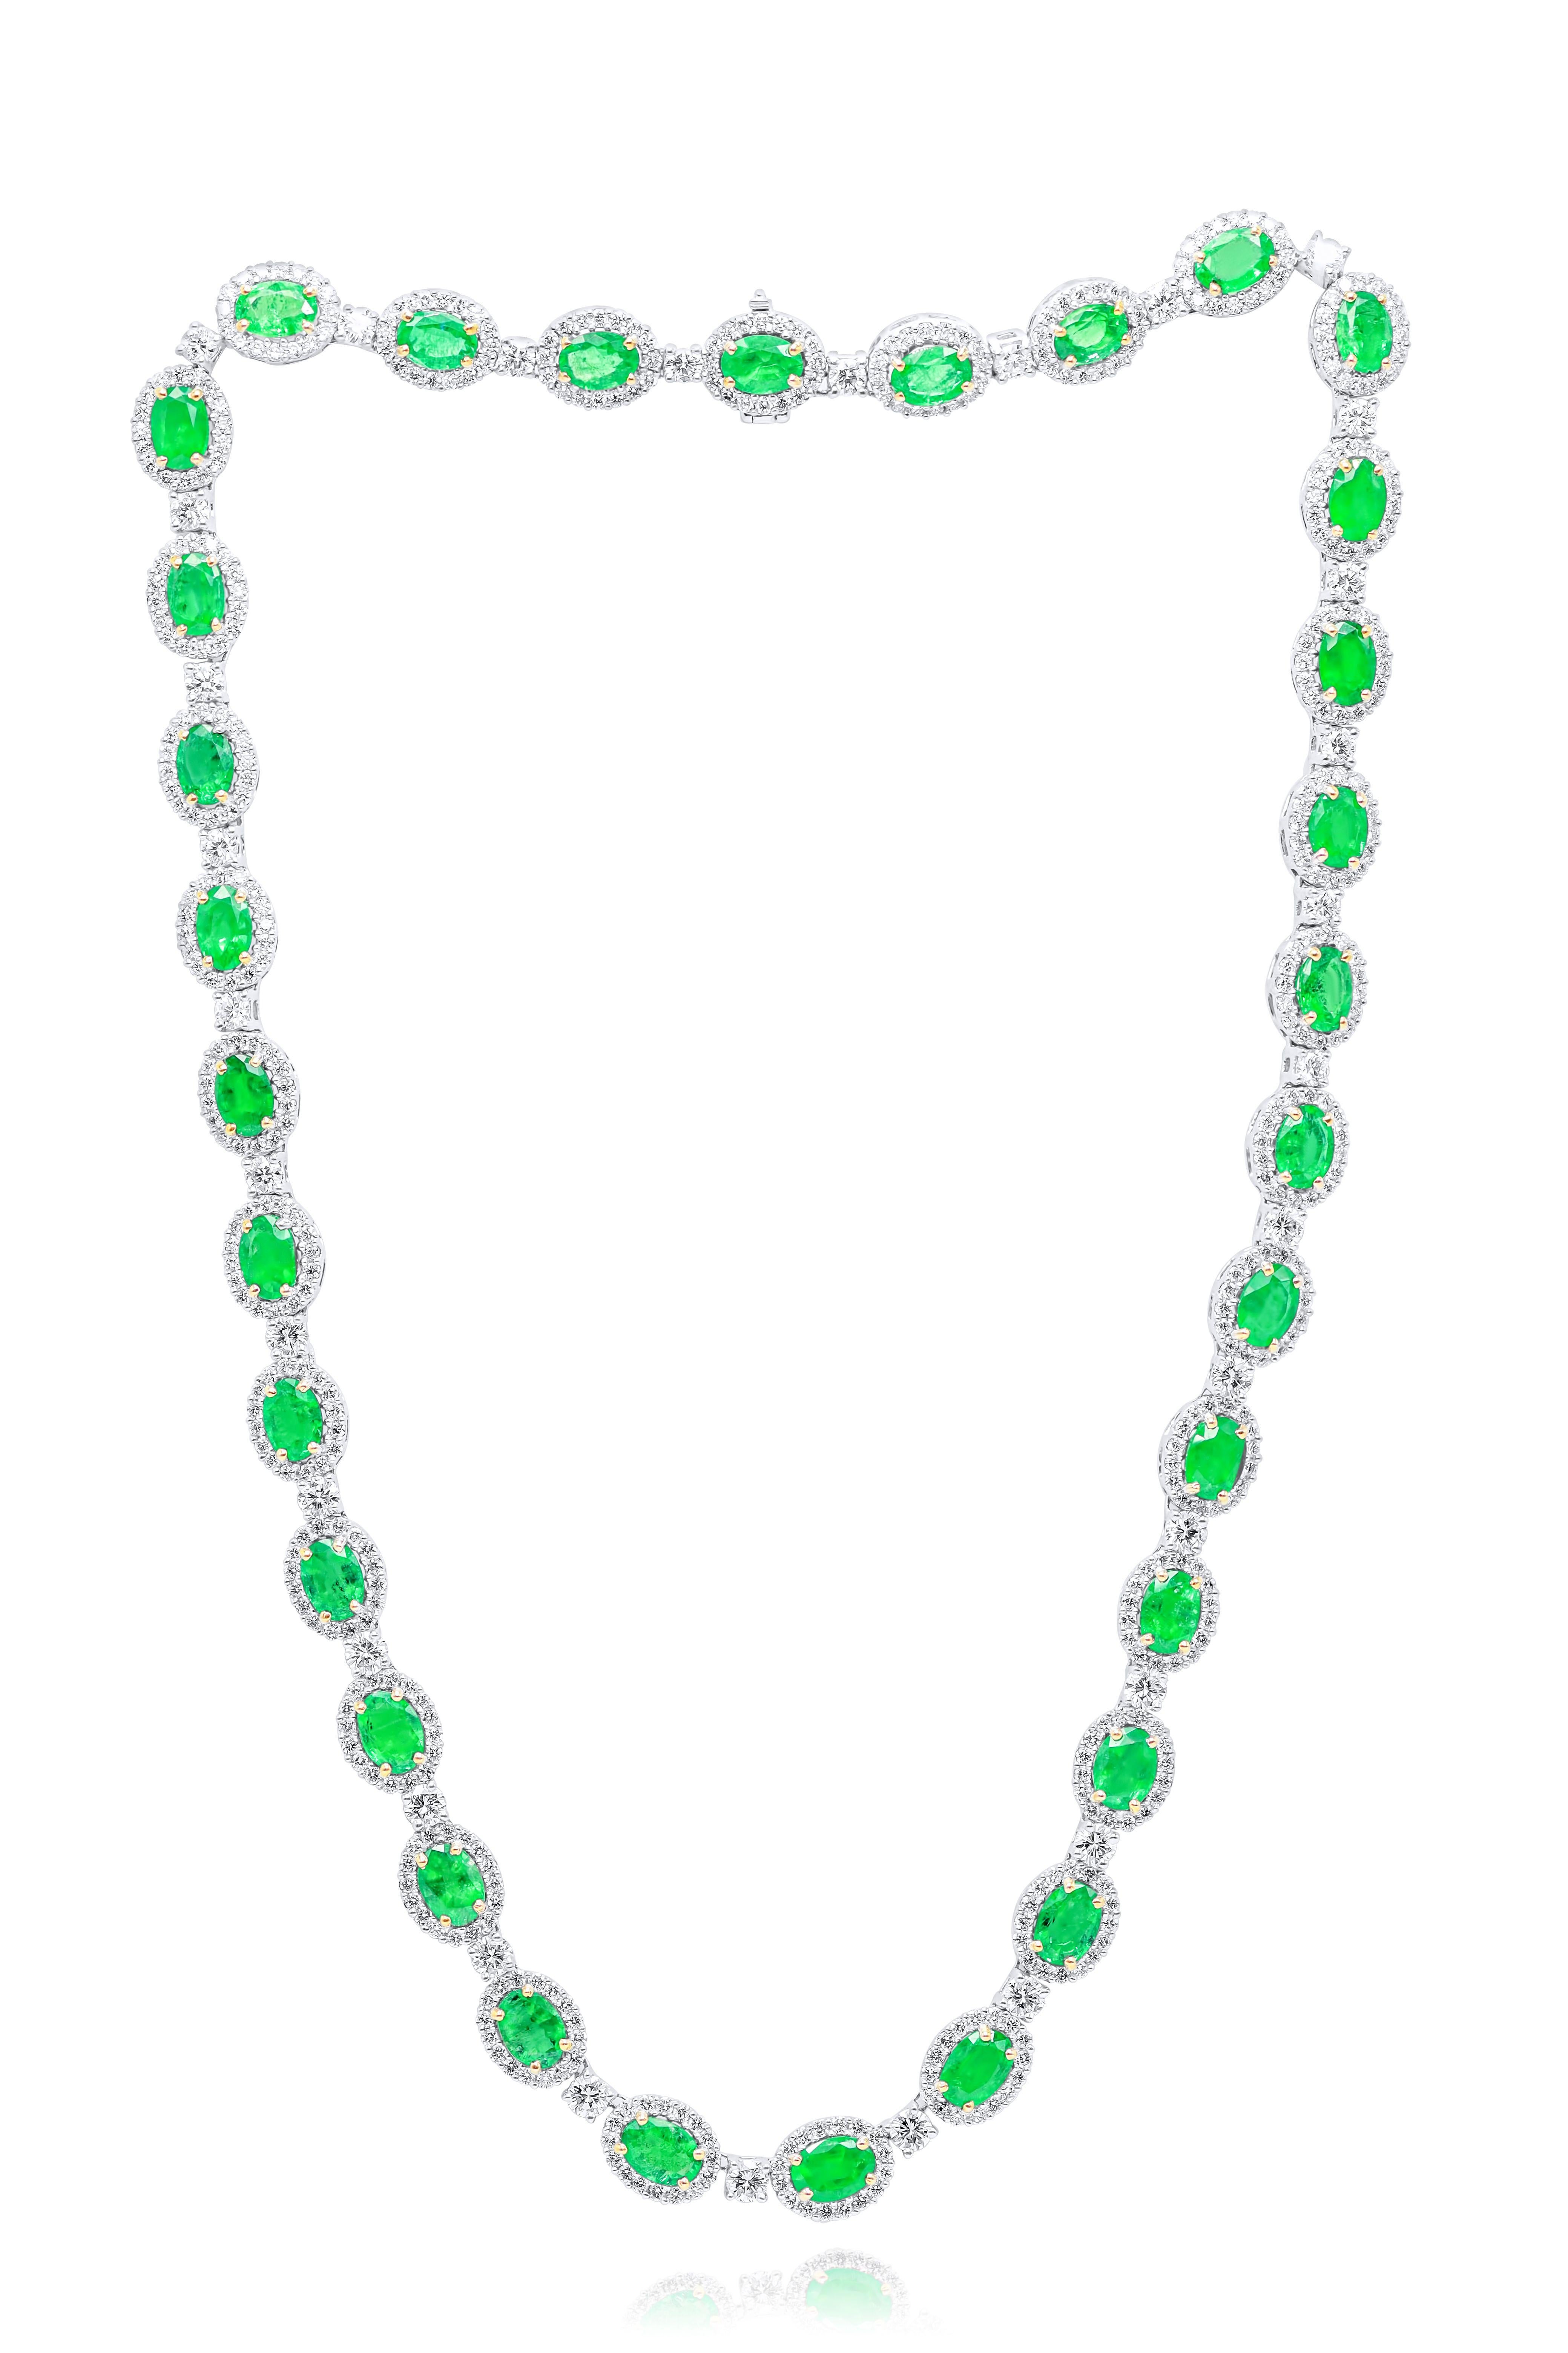 18kt white gold necklace 32 pcs oval emerald 22.54cts with halo 10.51 cts diamonds ( diamonds 544pcs ), 45.60gm